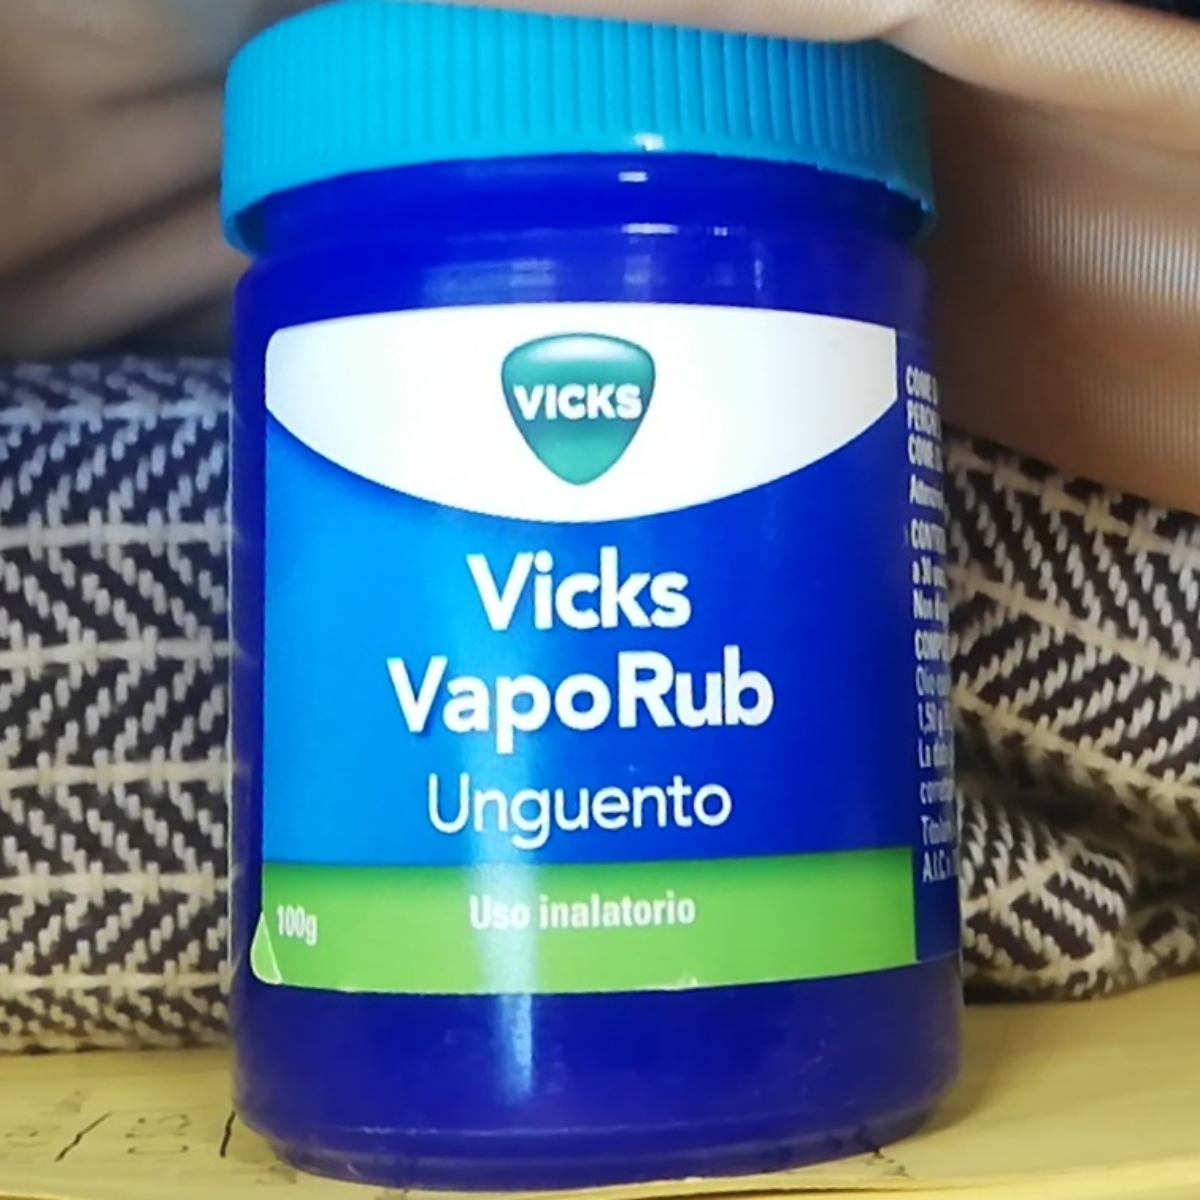 Vicks Vicks Vaporub Unguento Reviews